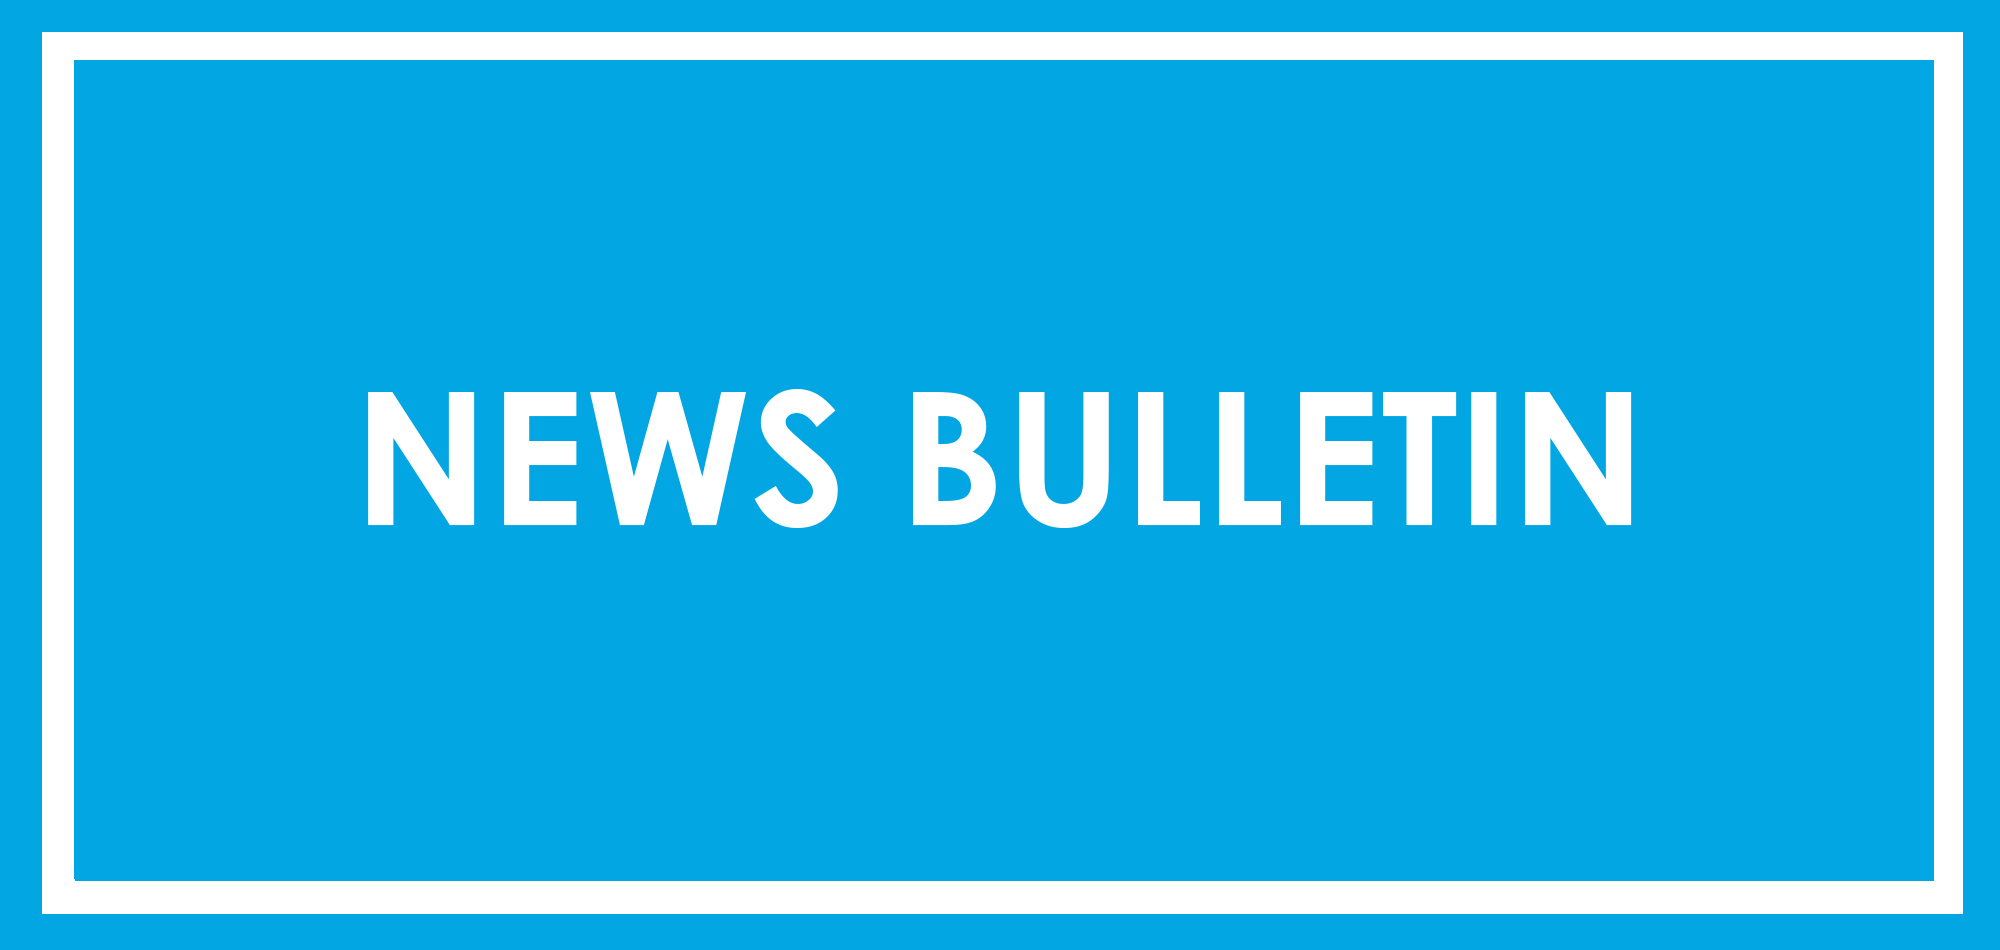 News Bulletin - 07.10.21